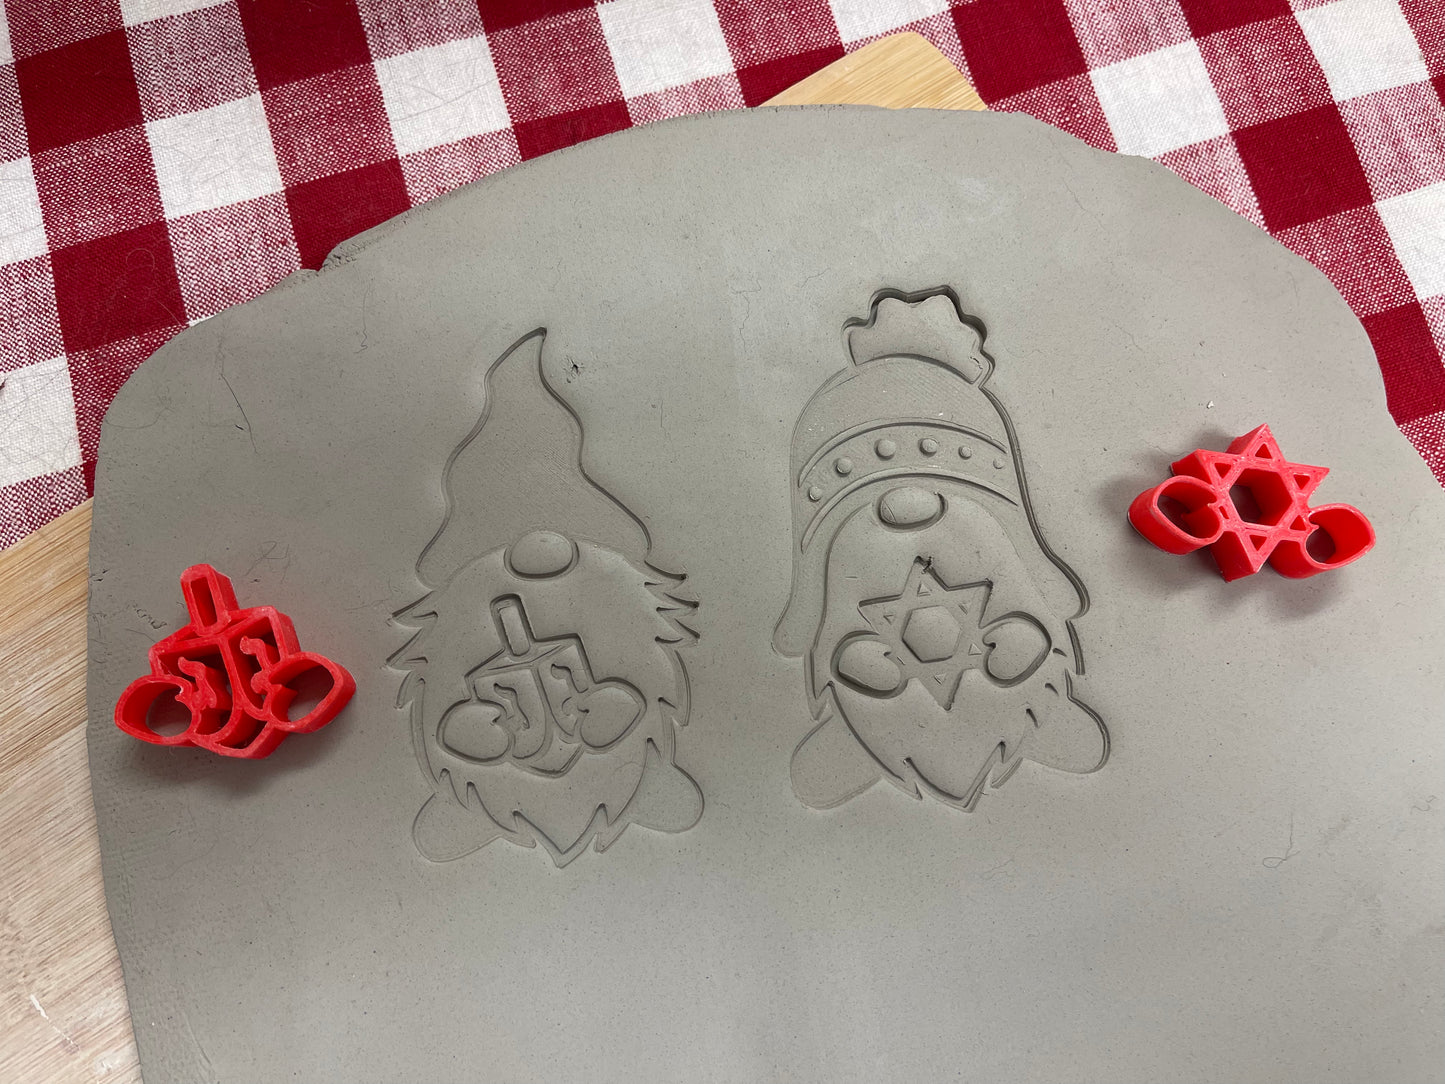 Gnome hands extras stamps, Hanukkah designs - plastic 3D printed, multiple sizes